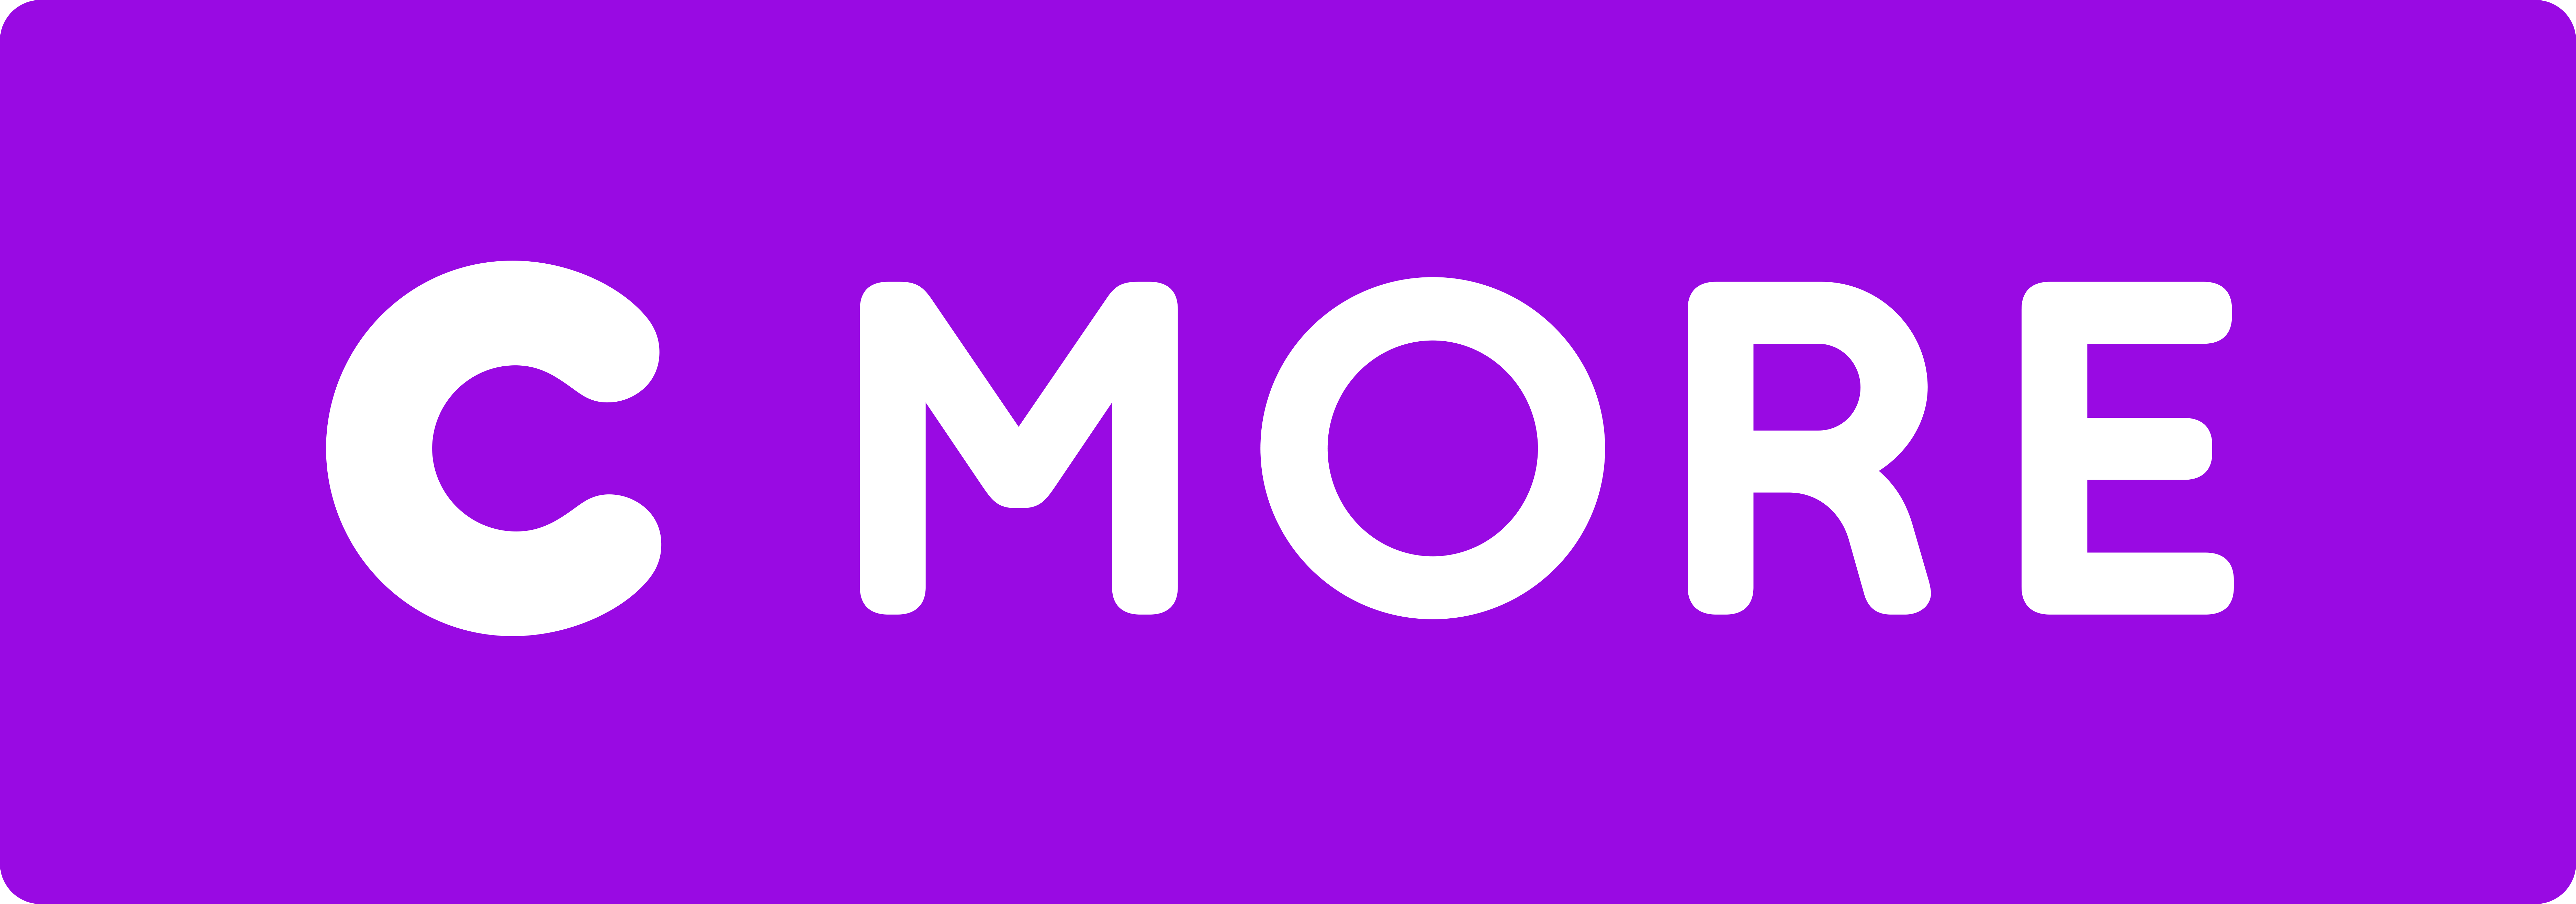 C more play. More TV логотип. C-more. Biovit логотип. Play more.